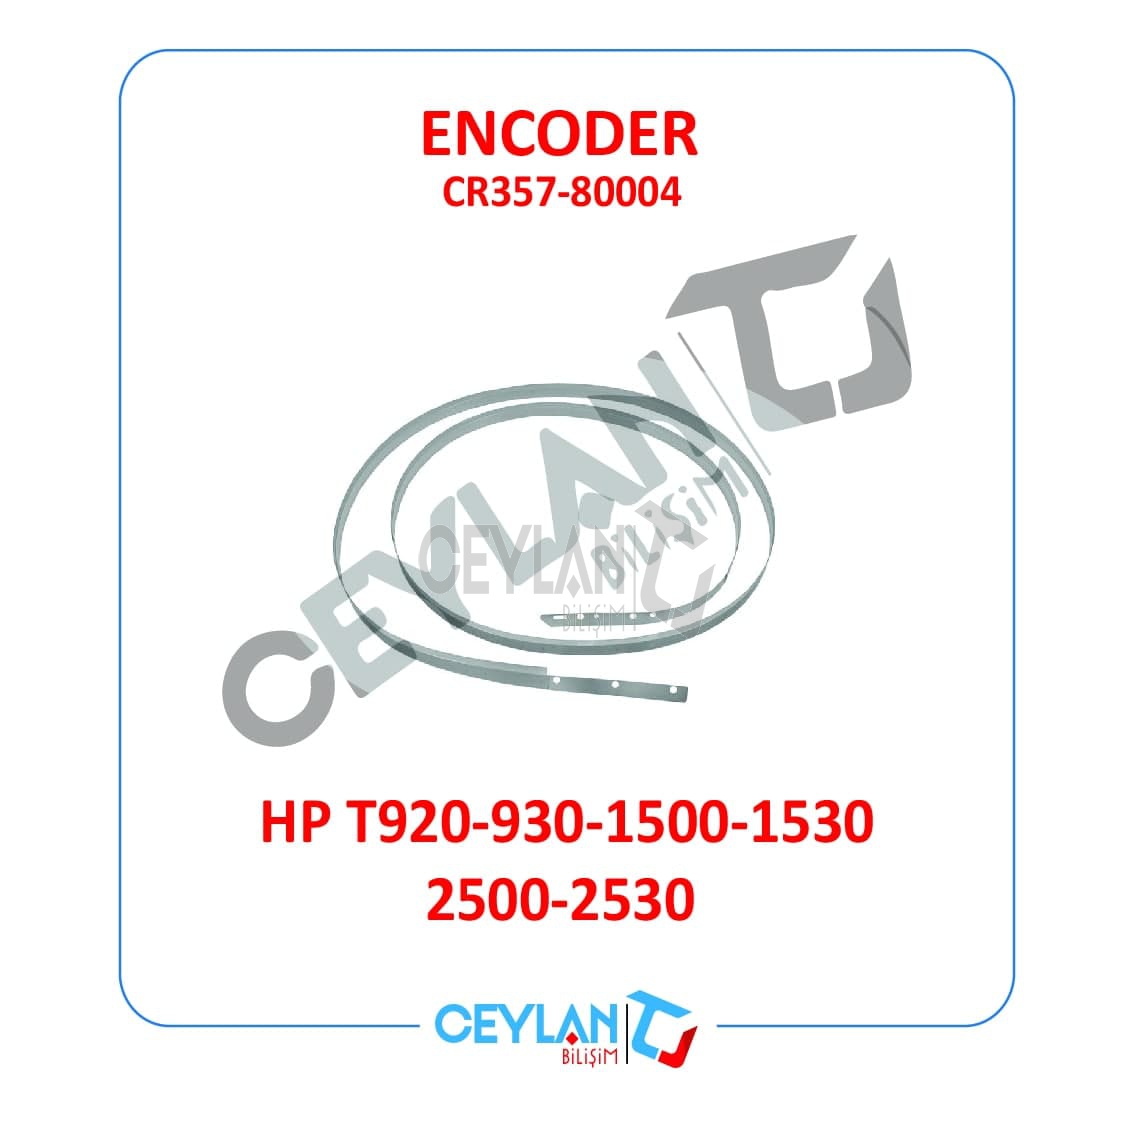 HP Encoder 